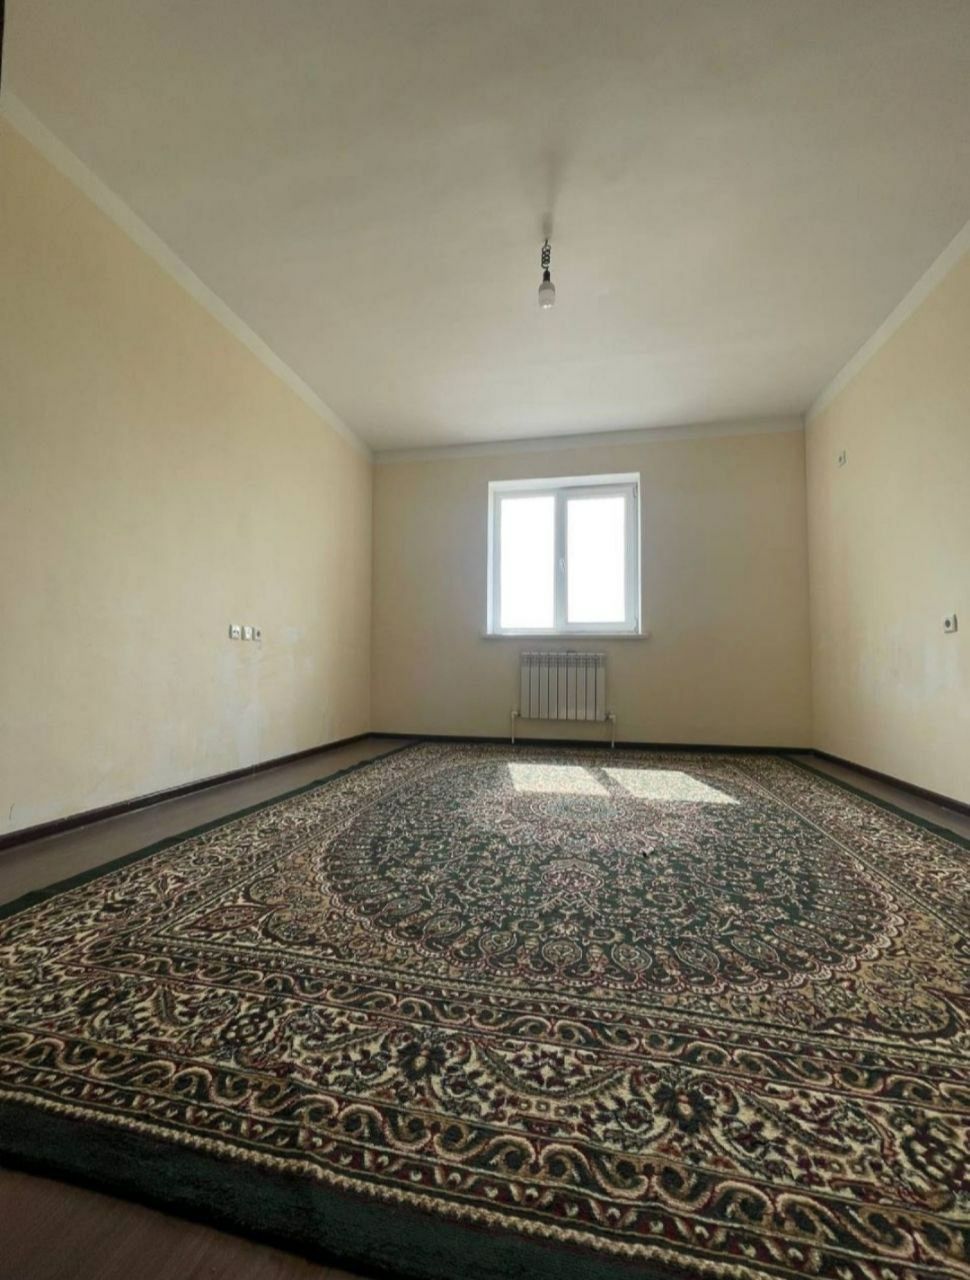 Продам квартиру в Корасув от собственника, без риелтора и комиссии!